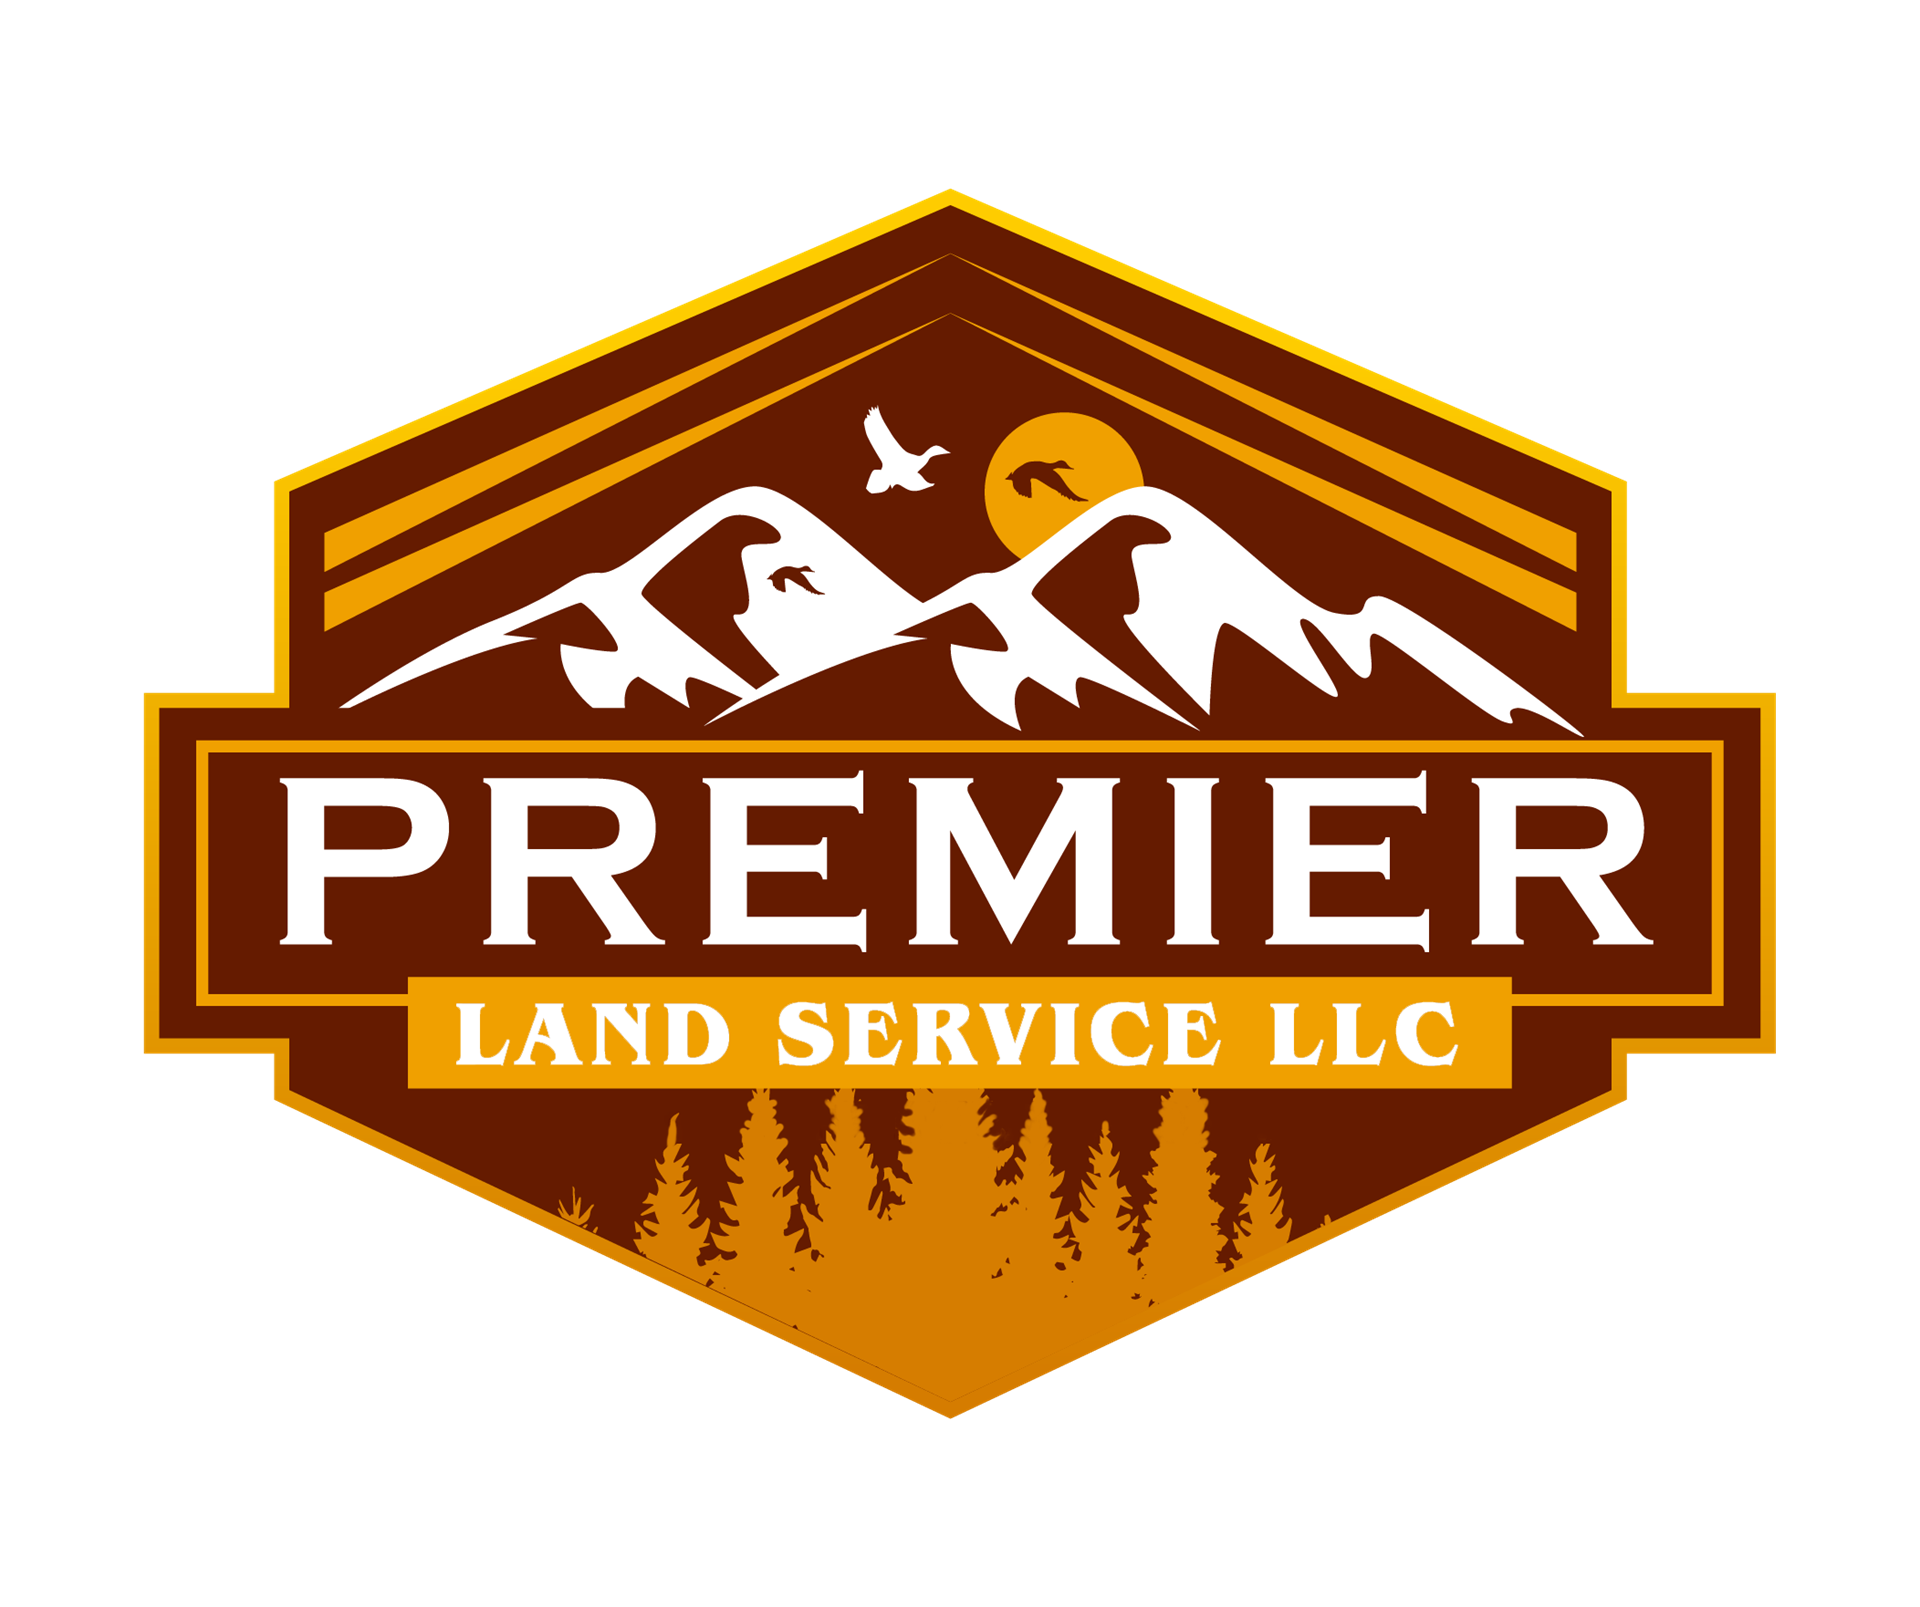 Premier Land Service LLC